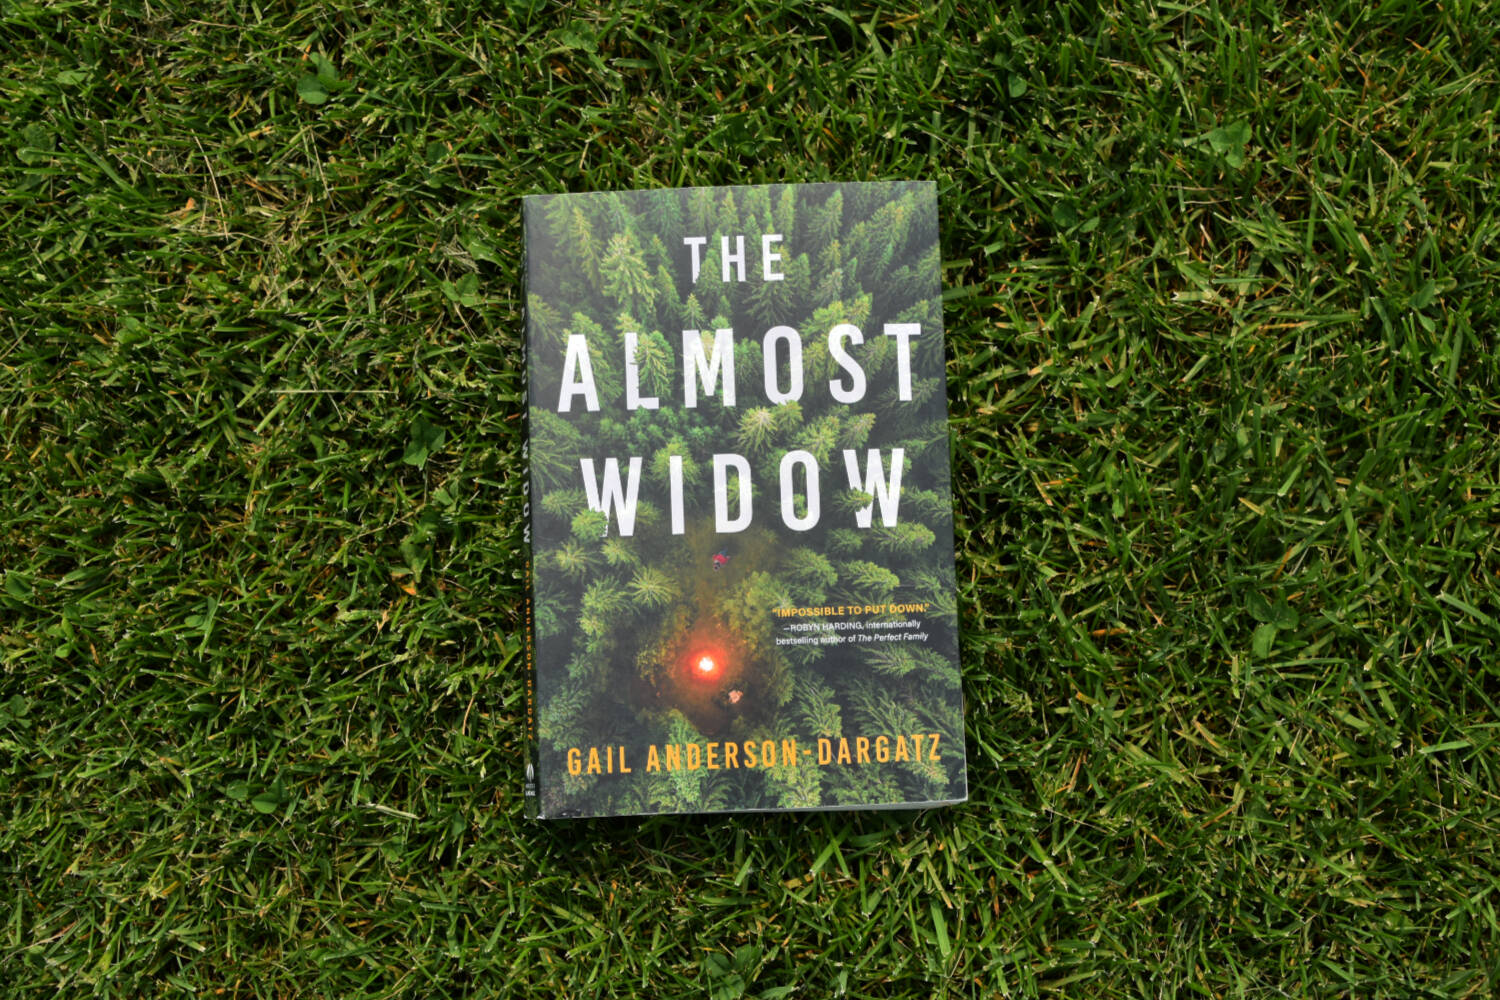 Shuswap international award-winning author Gail Anderson-Dargatzs latest novel, The Almost Widow. (Martha Wickett-Salmon Arm Observer)